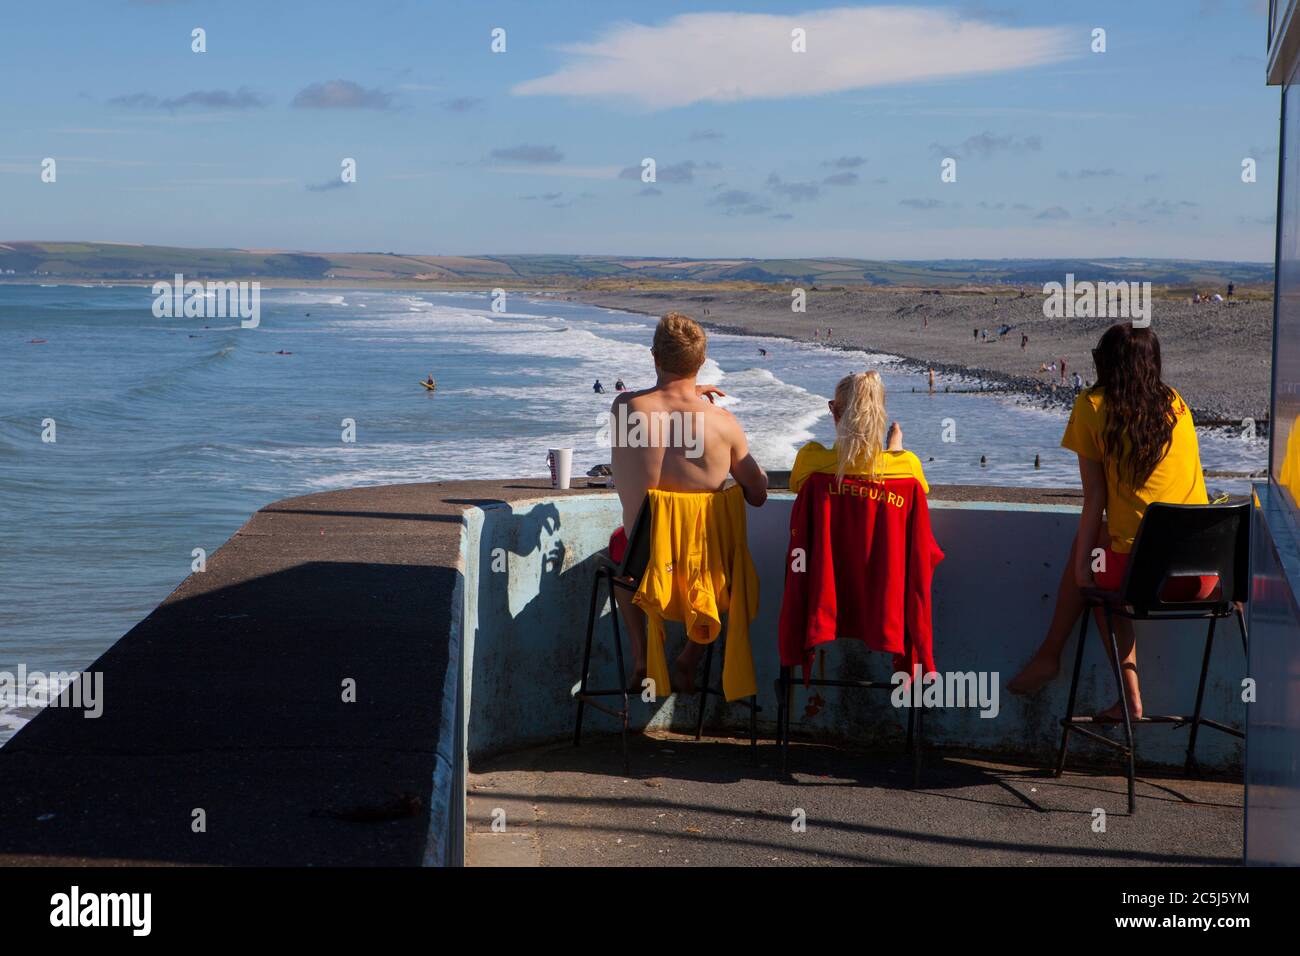 Three lifeguards on duty at Westward Ho! beach, North Devon, England, August. Stock Photo